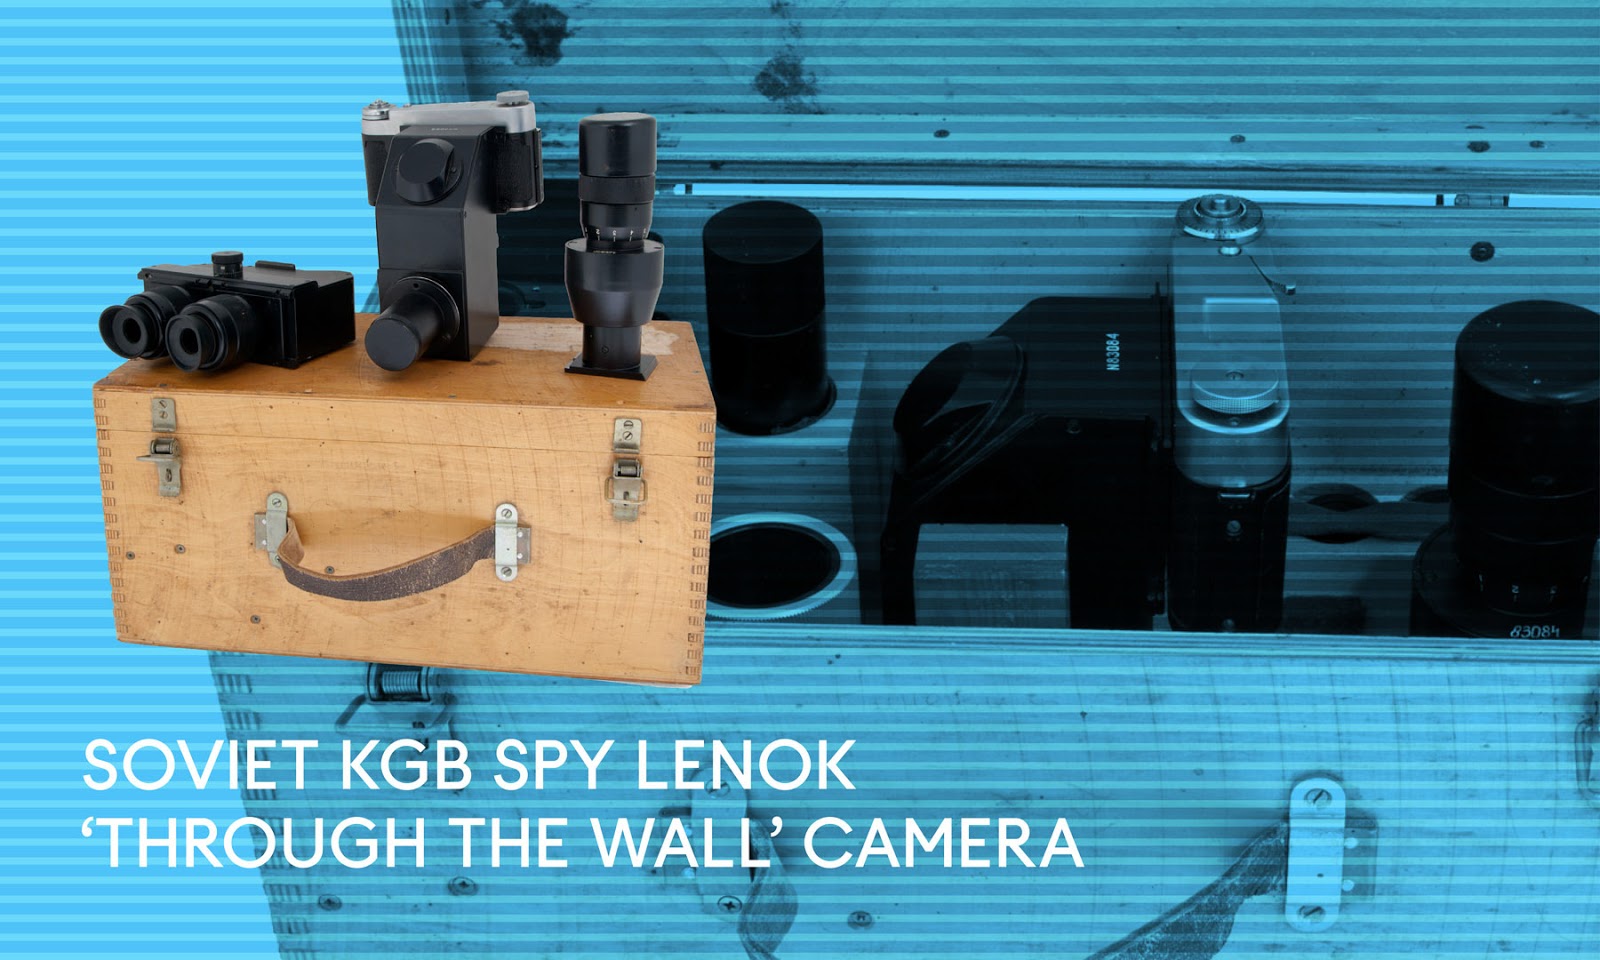 KGB through the wall camera